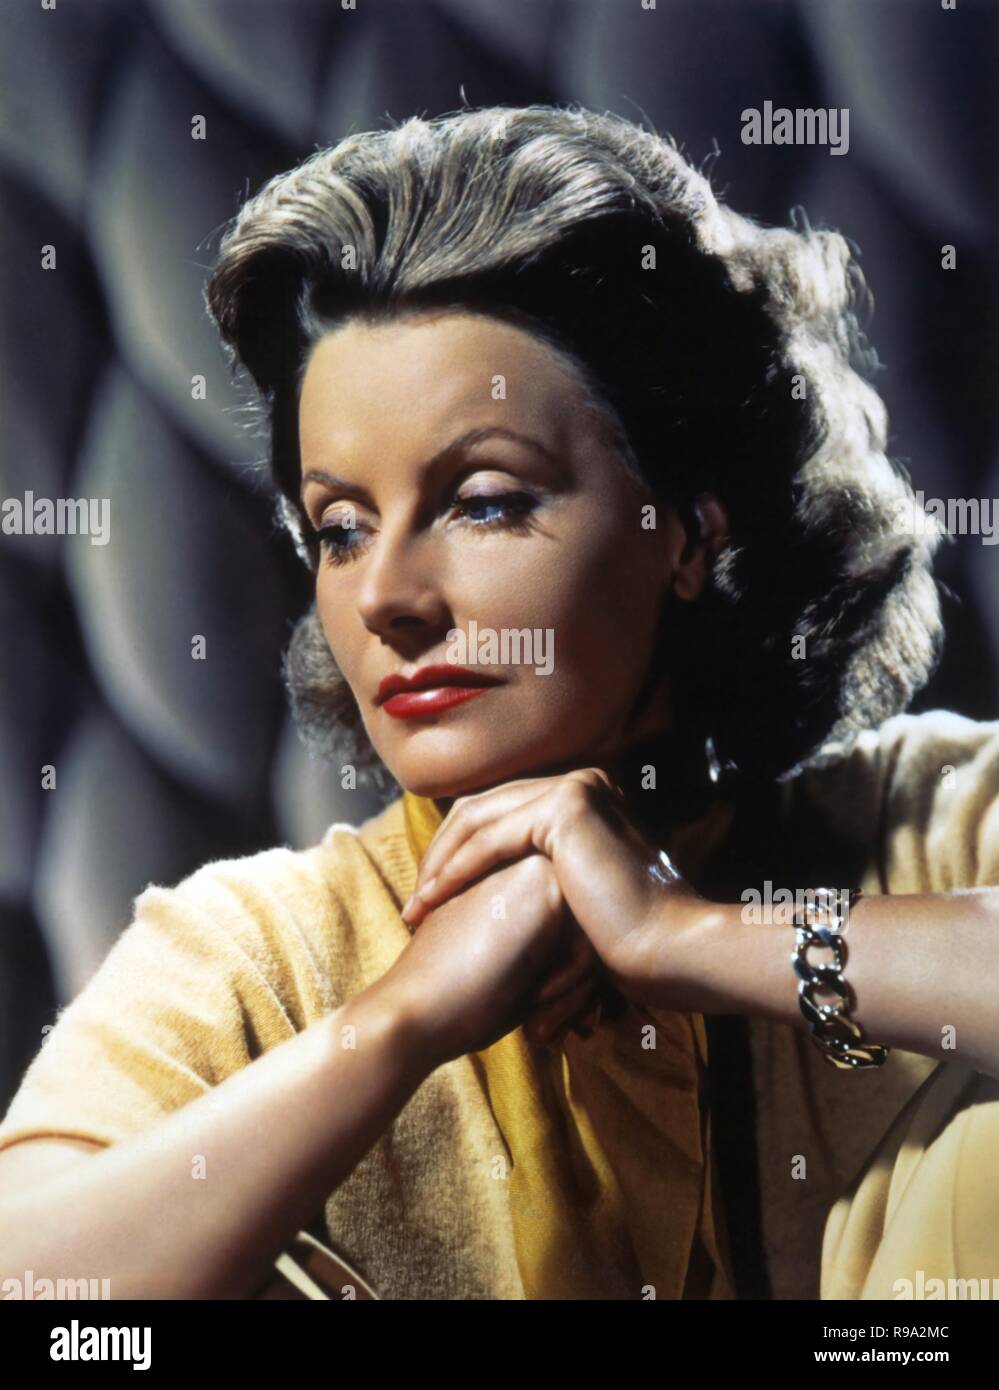 Original film title: TWO-FACED WOMAN. English title: TWO-FACED WOMAN. Year: 1941. Director: GEORGE CUKOR. Stars: GRETA GARBO. Credit: M.G.M / BULL, CLARENCE SINCLAIR / Album Stock Photo